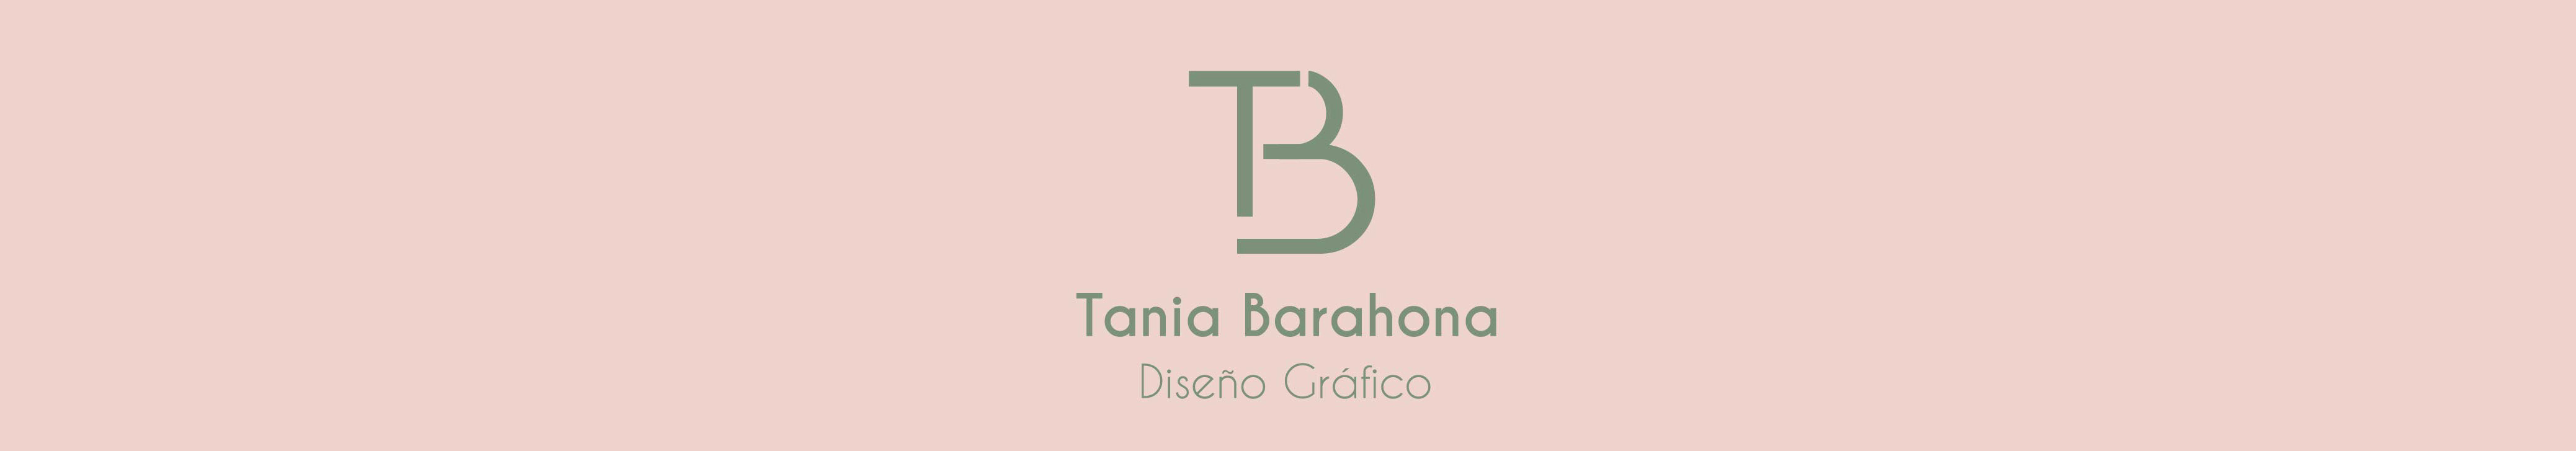 Tania Barahonas profilbanner